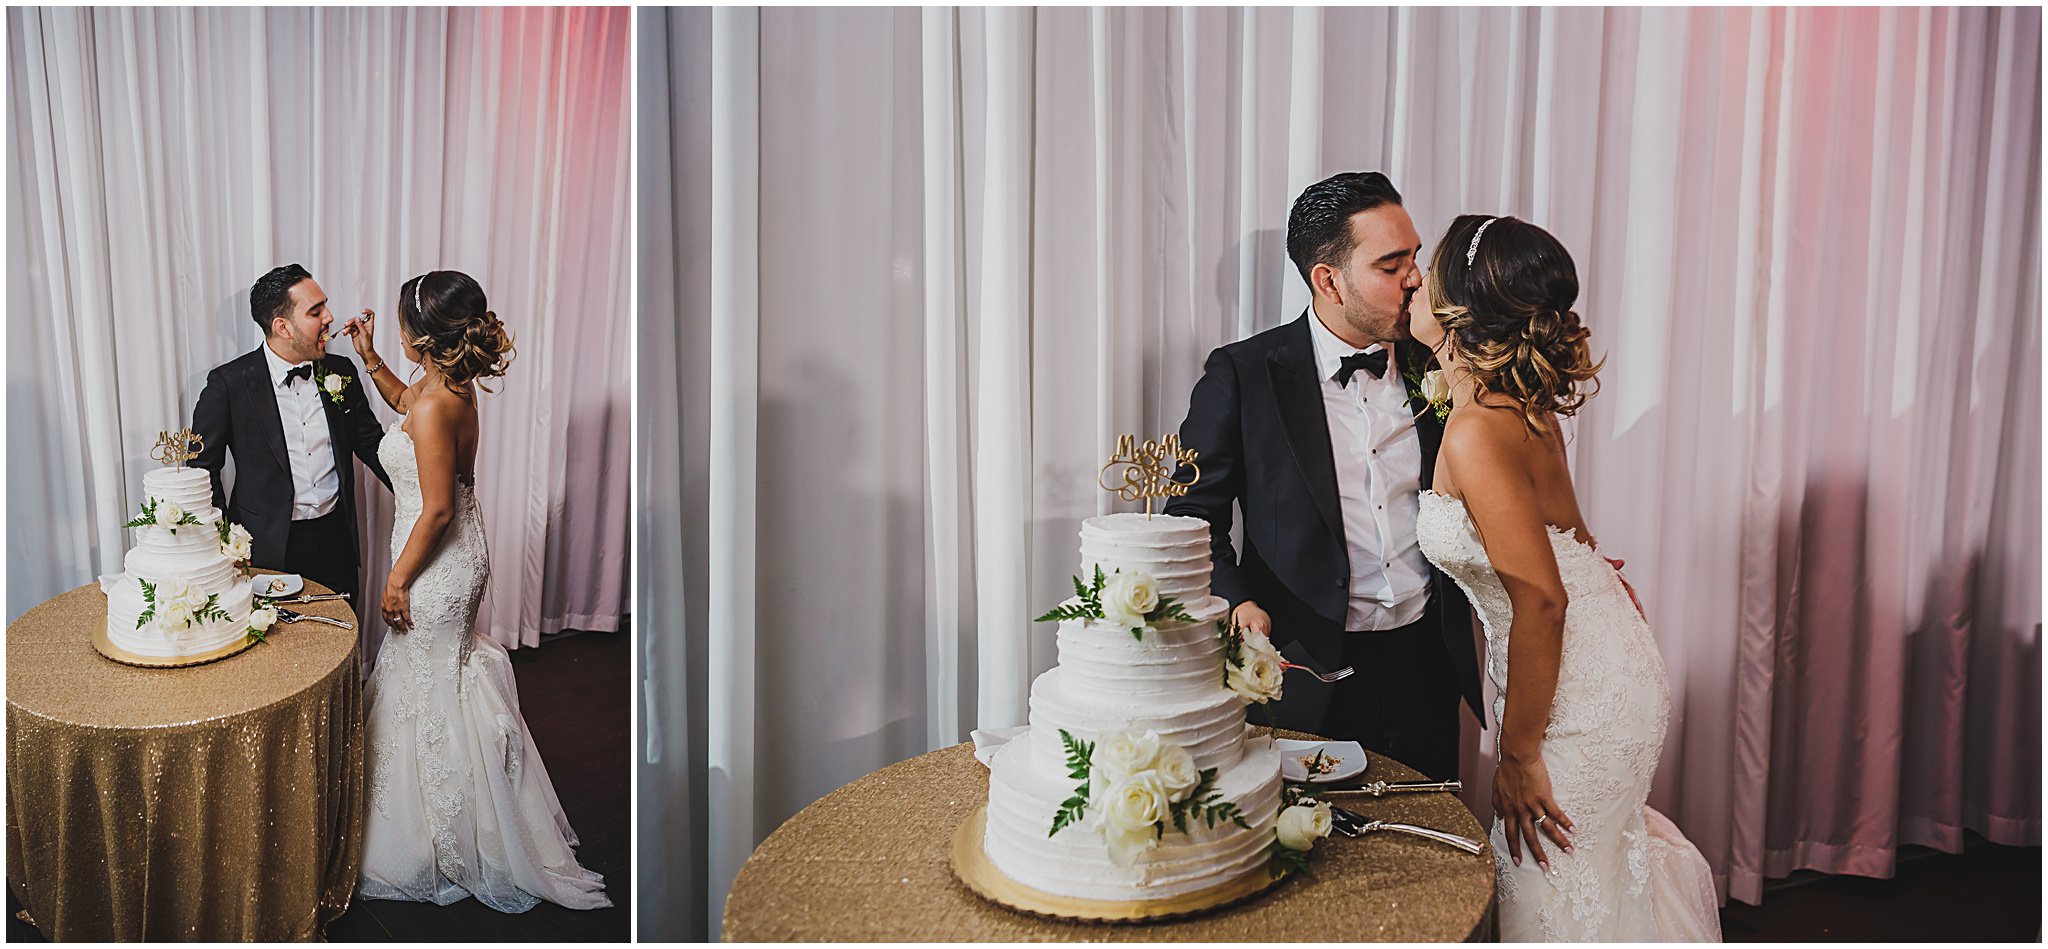 bride kissing groom cake cutting